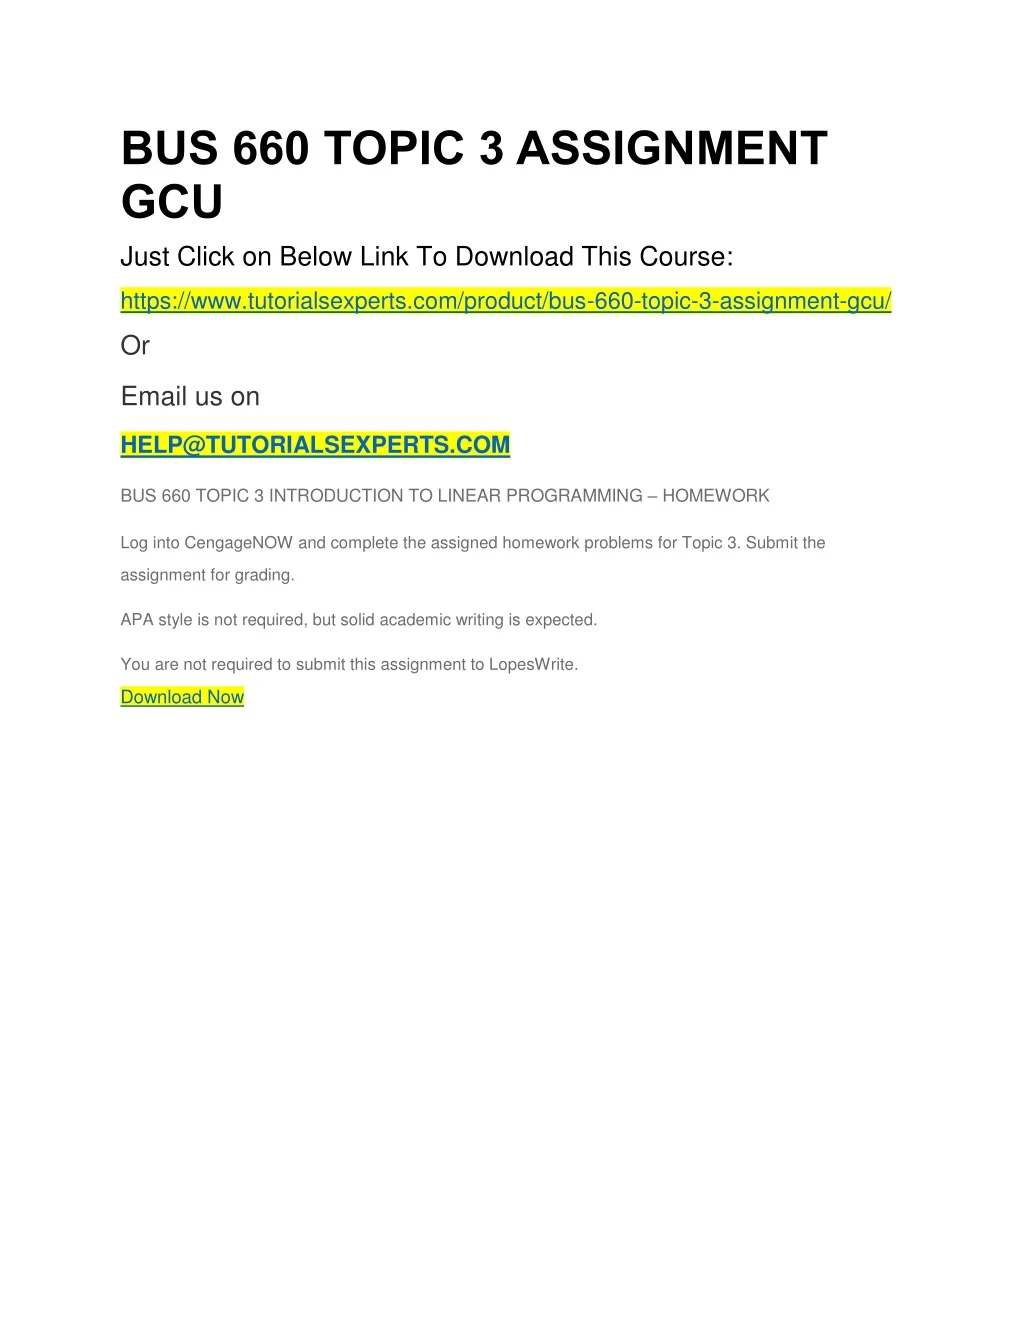 bus 660 topic 3 assignment gcu just click